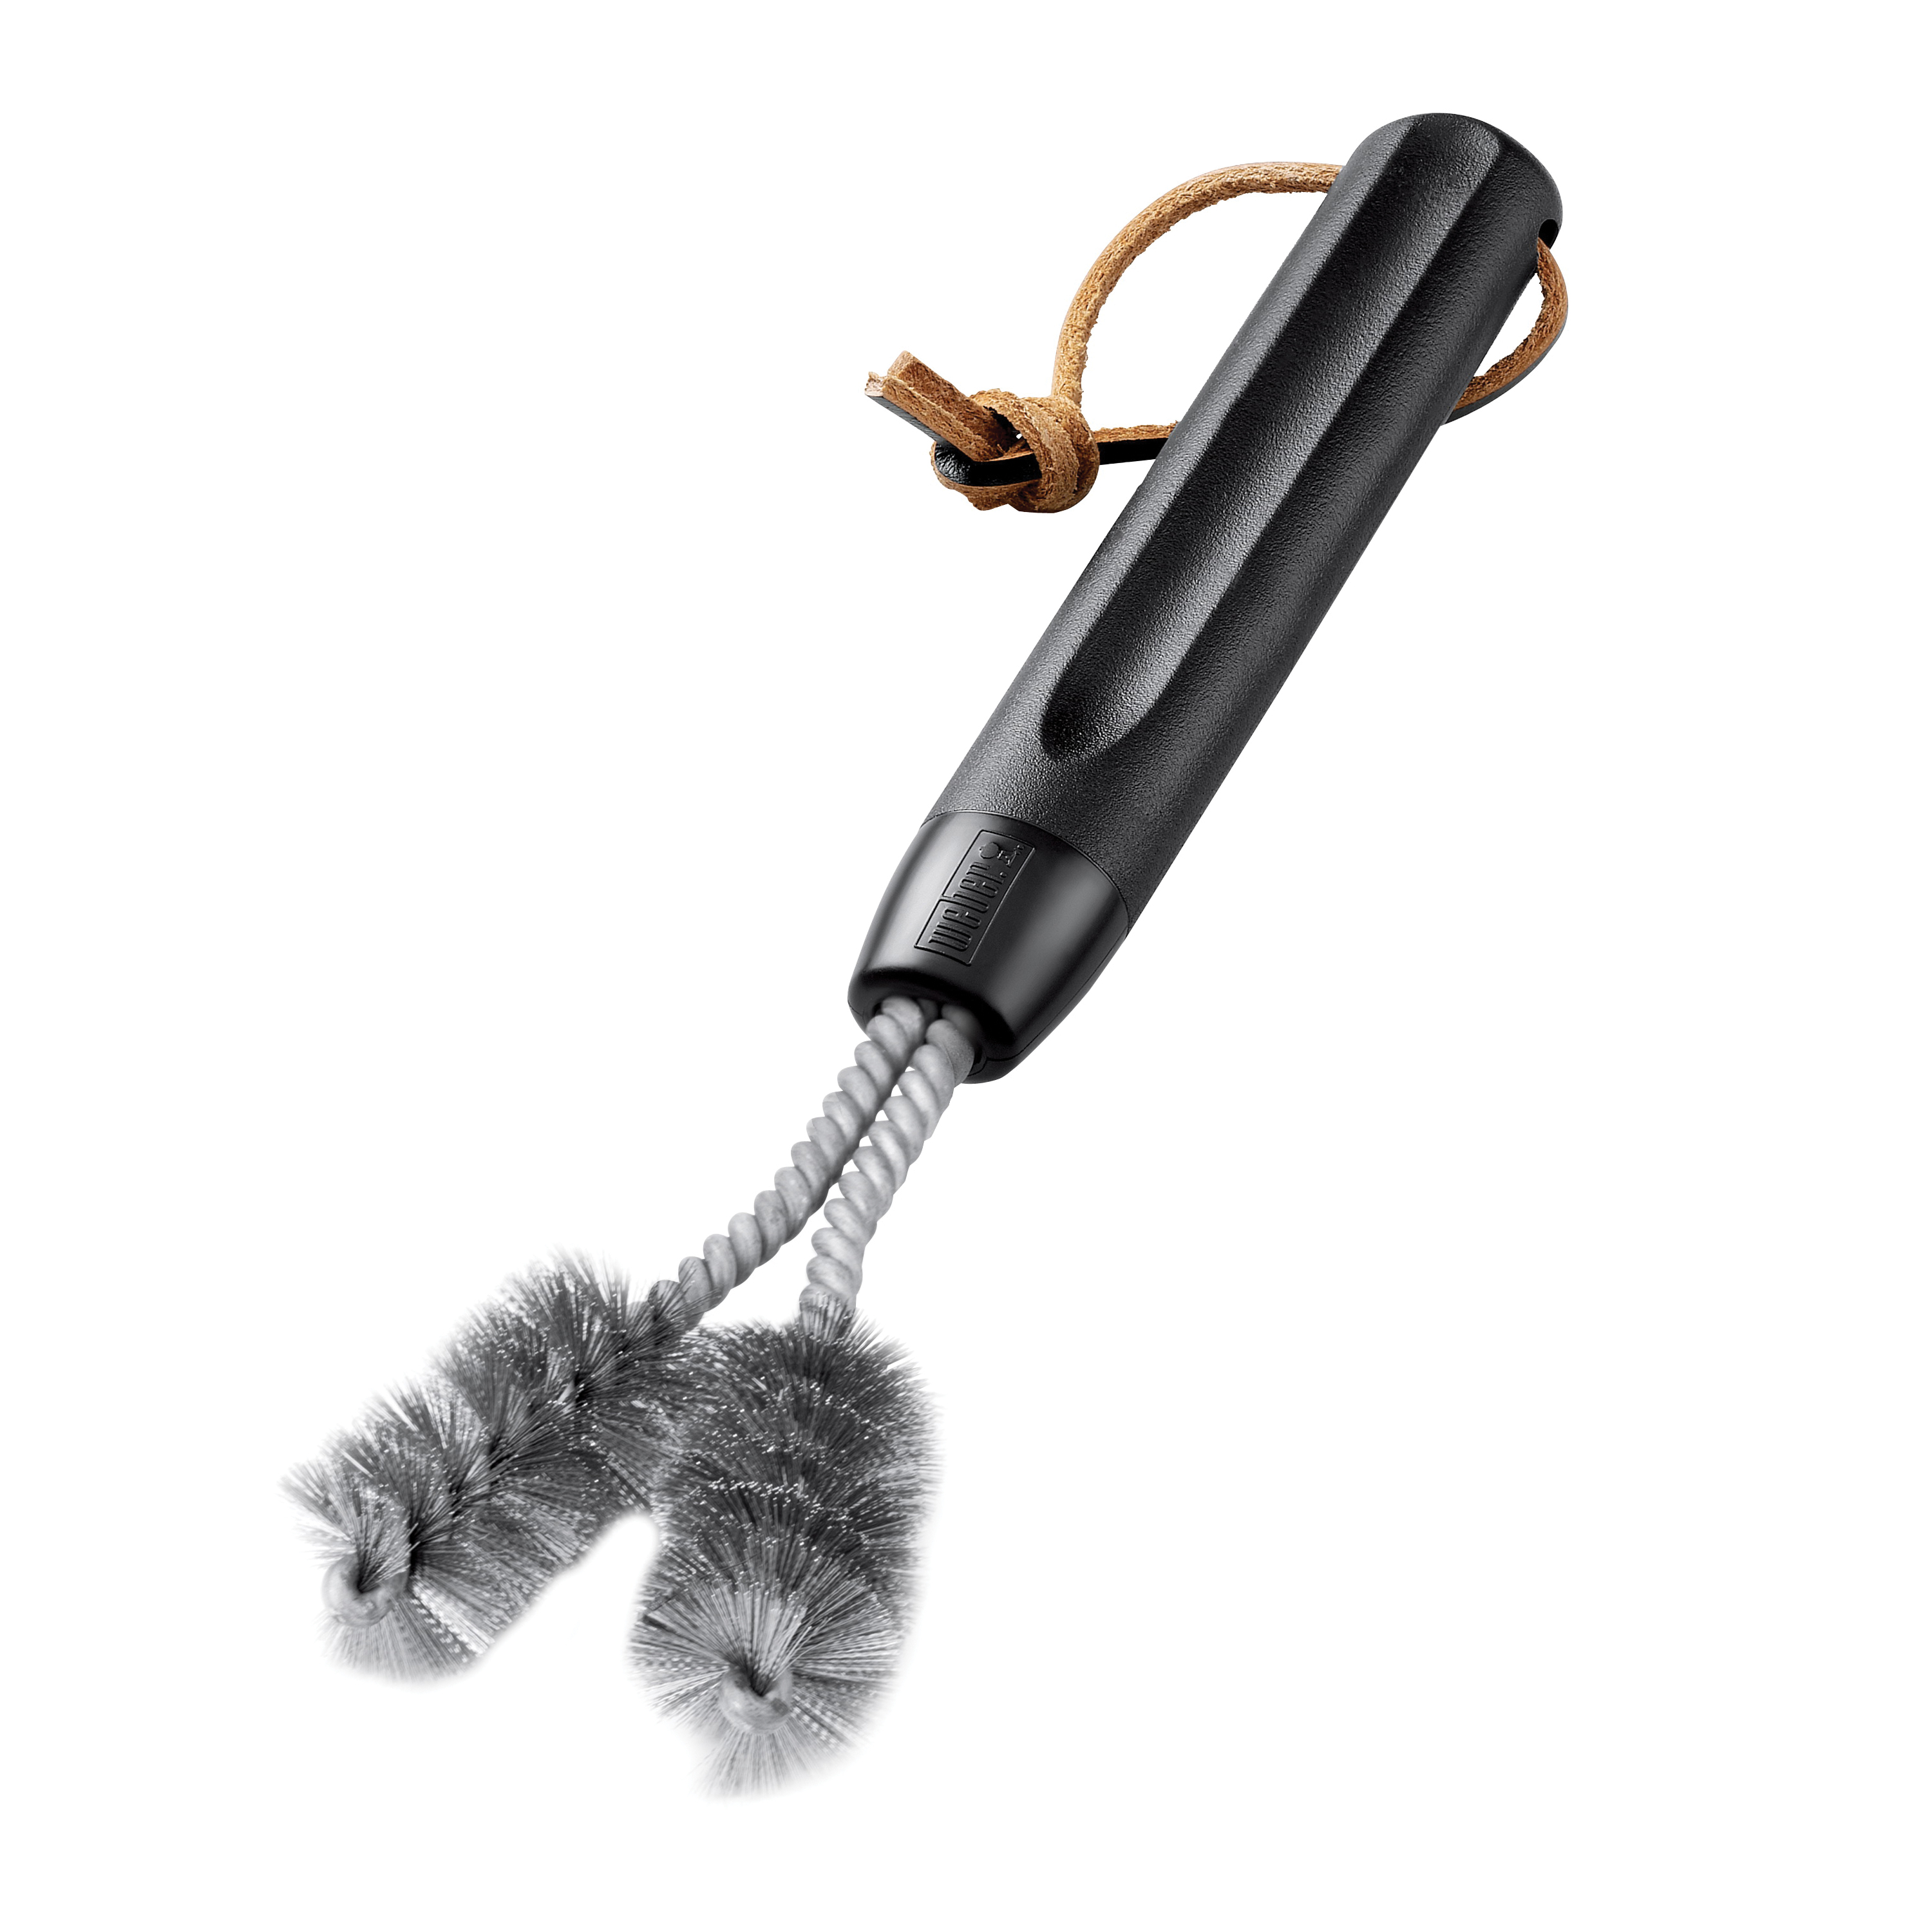 6495 Grill Cleaning Brush, Stainless Steel Bristle, Plastic Handle, Ergonomic Handle